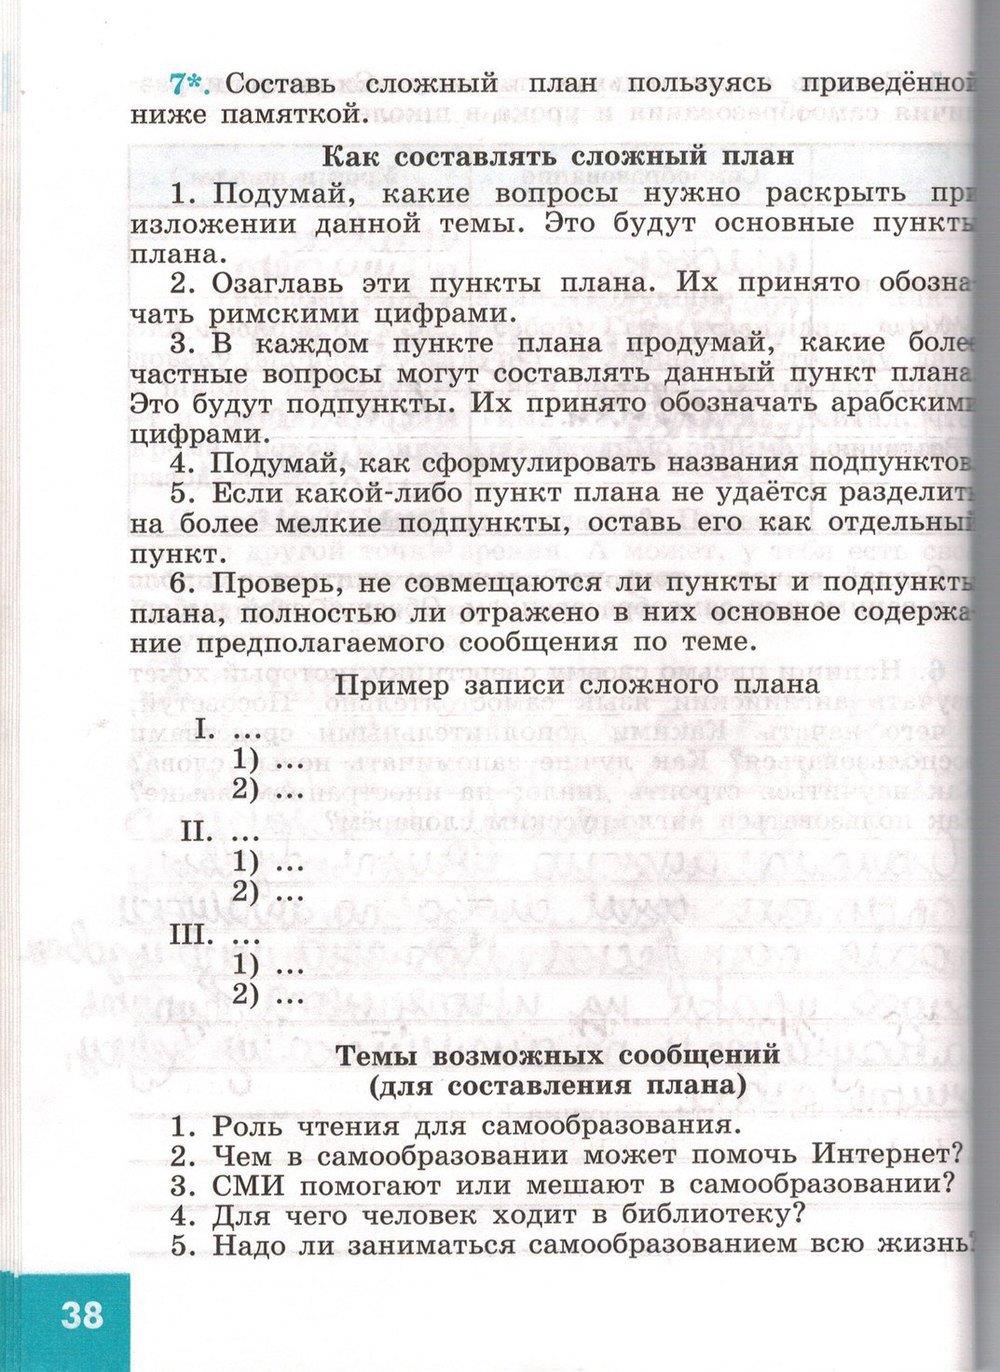 гдз 5 класс рабочая тетрадь страница 38 обществознание Иванова, Хотеенкова